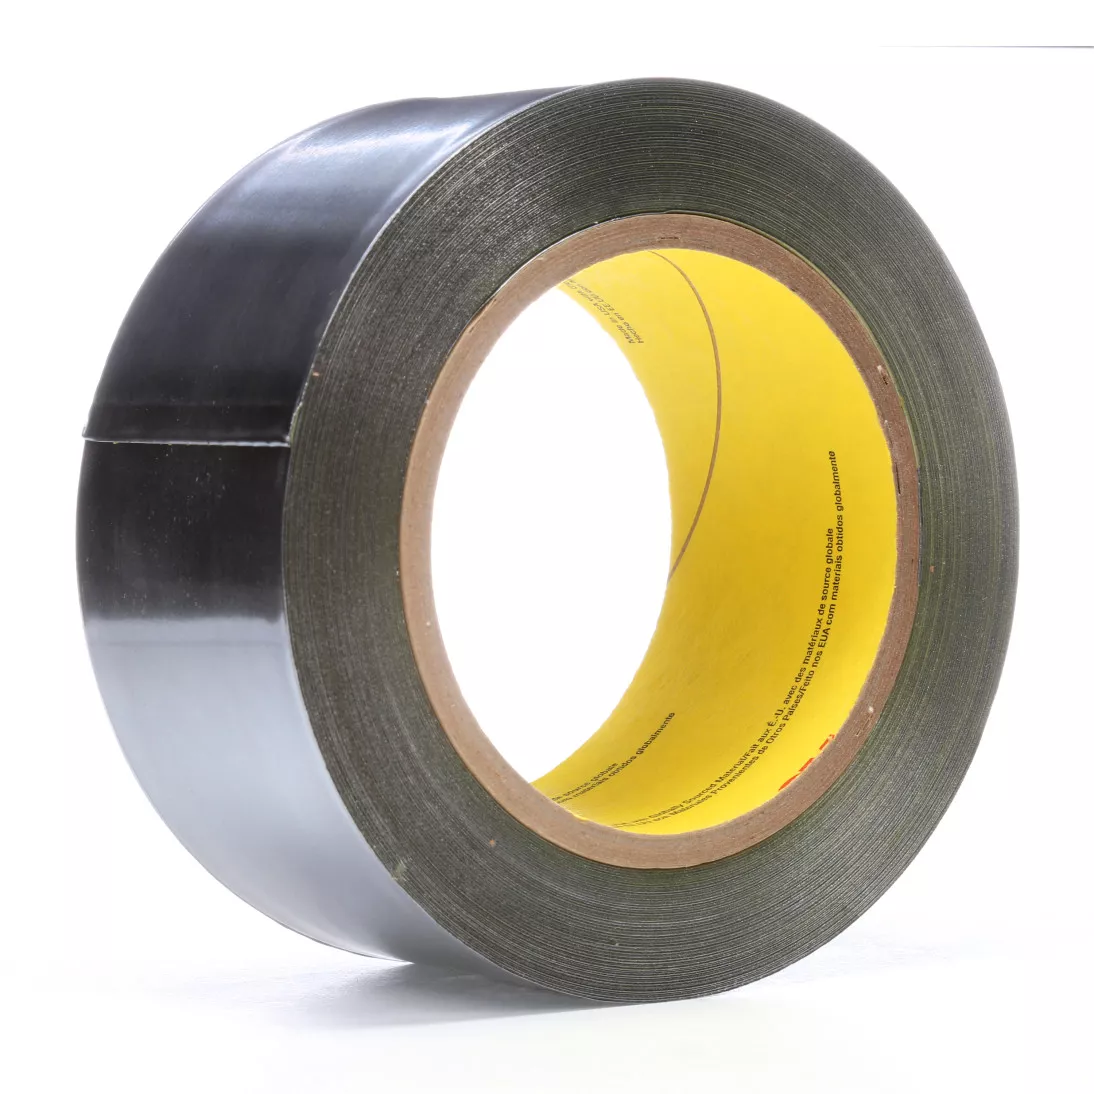 3M™ Lead Foil Tape 421, Dark Silver, 2 in x 36 yd, 6.3 mil, 6 rolls per
case